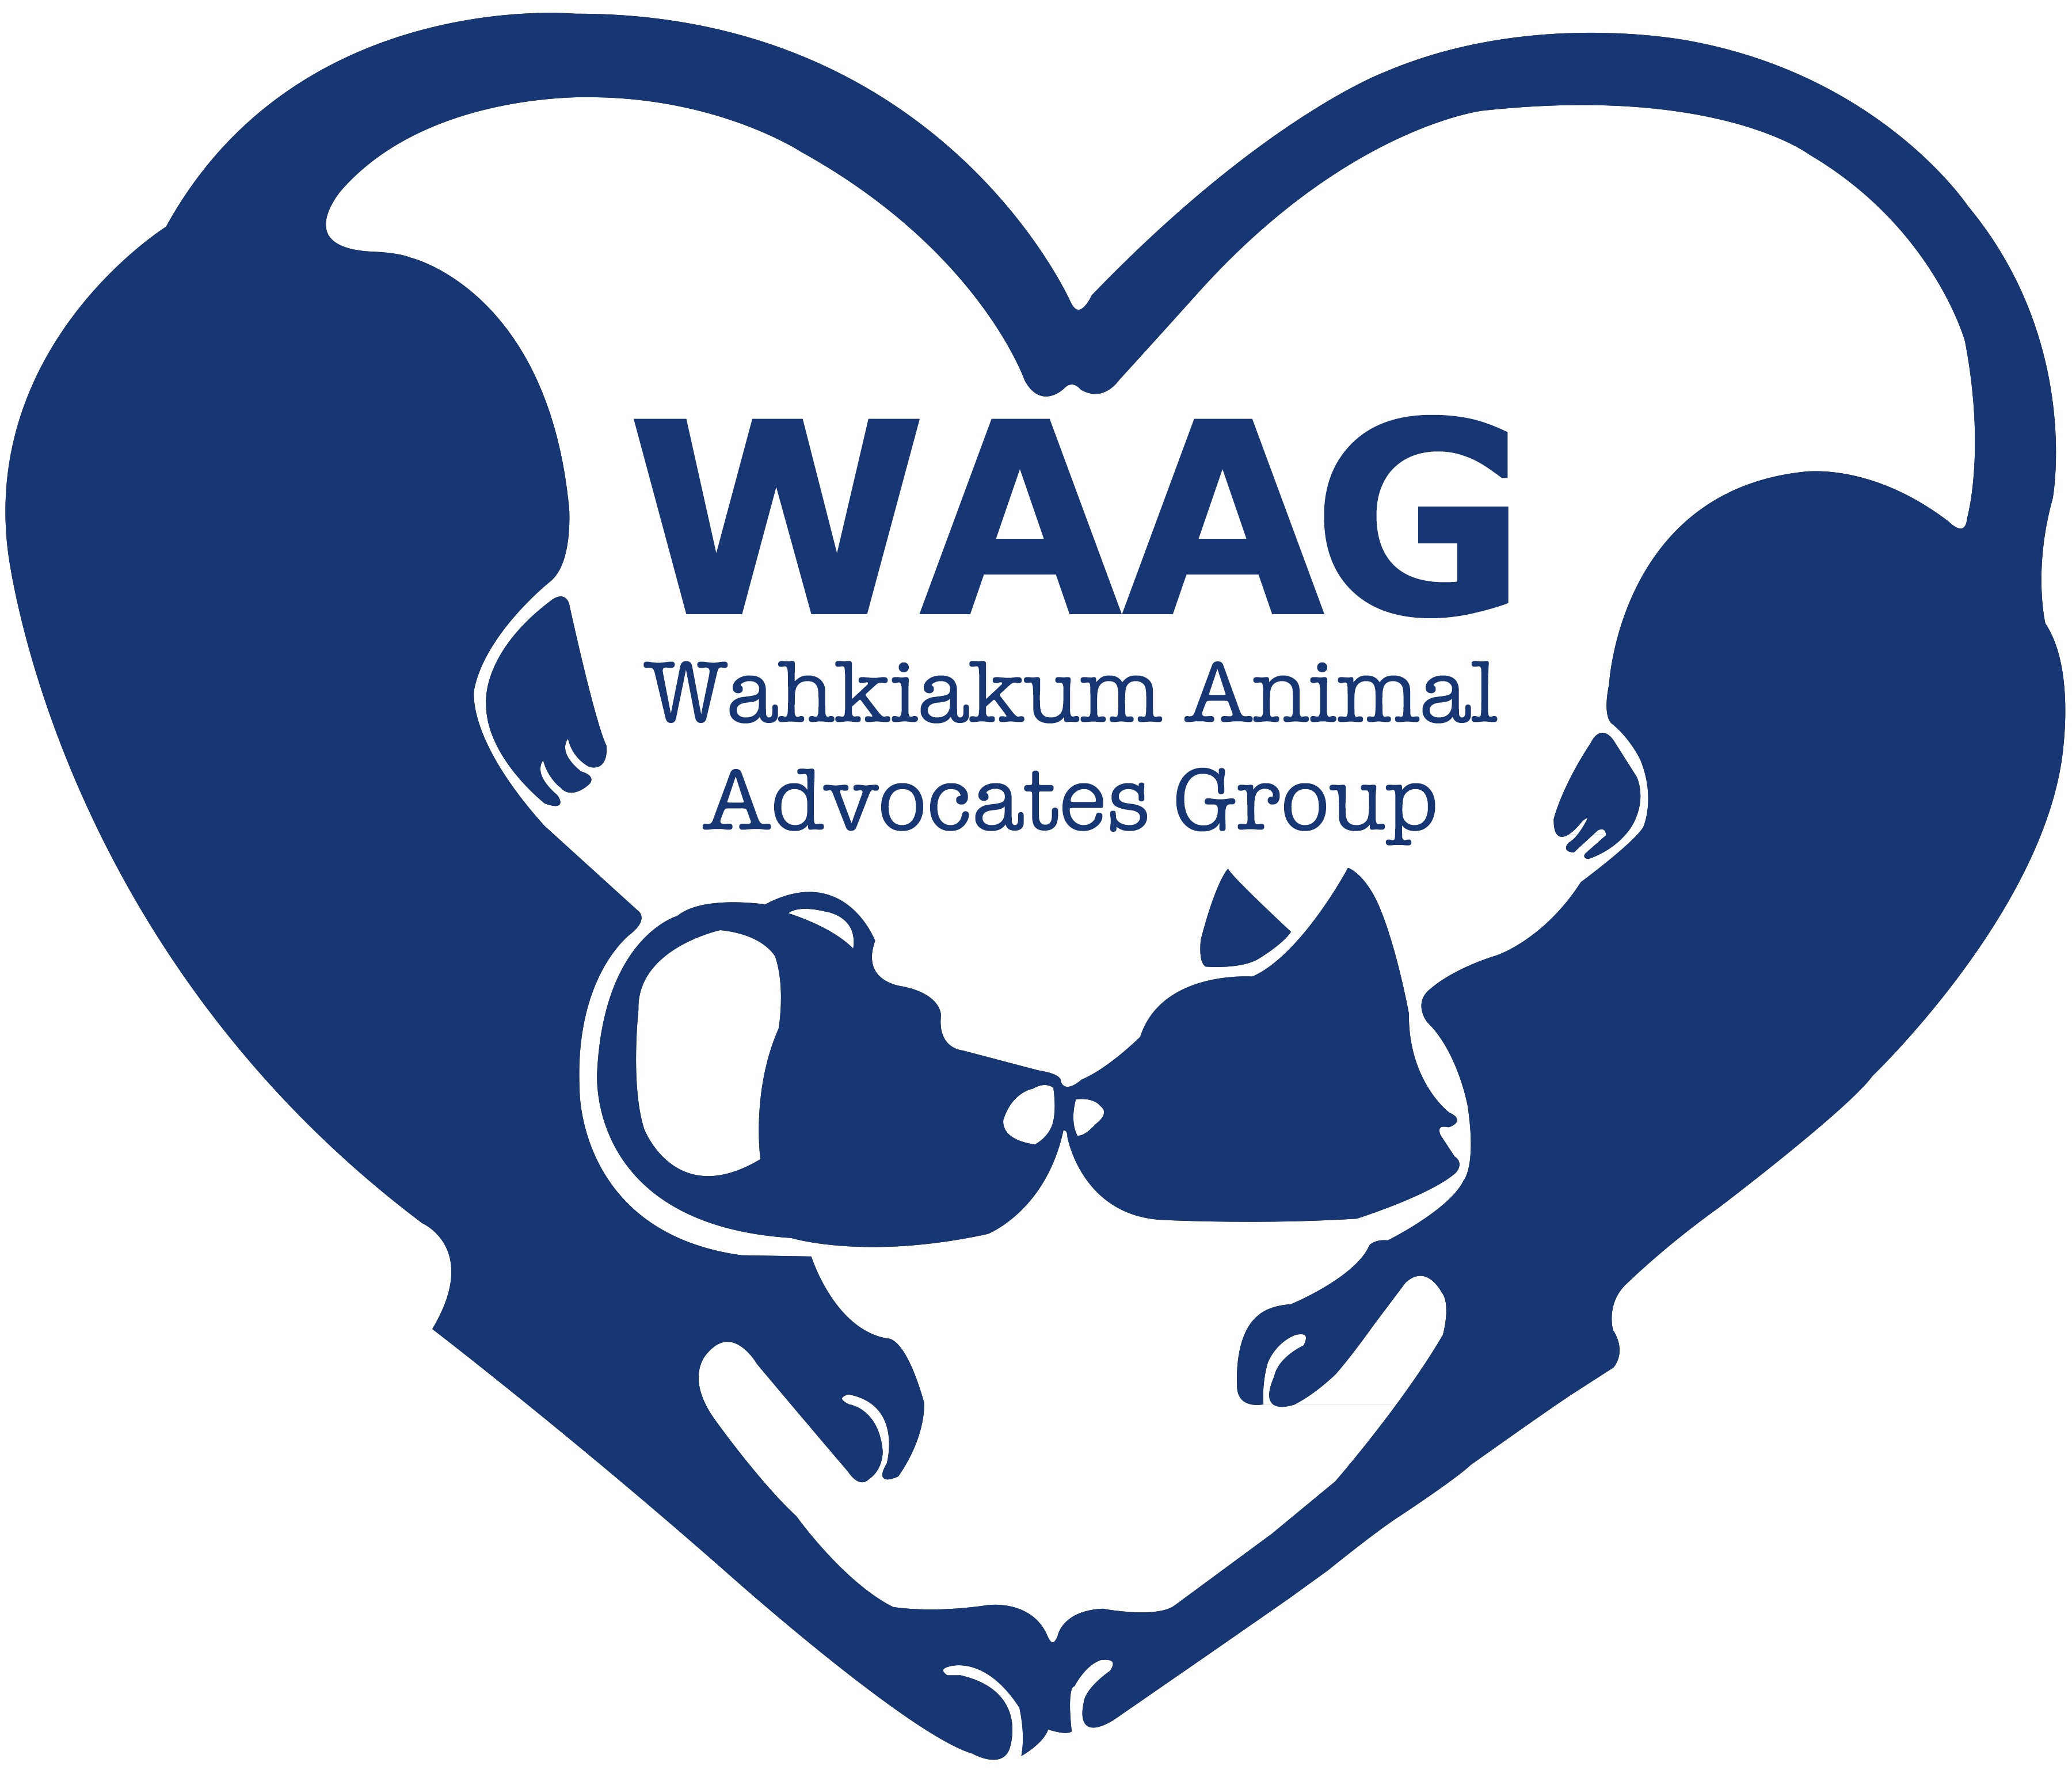 Wahkiakum Animal Advocates Group logo